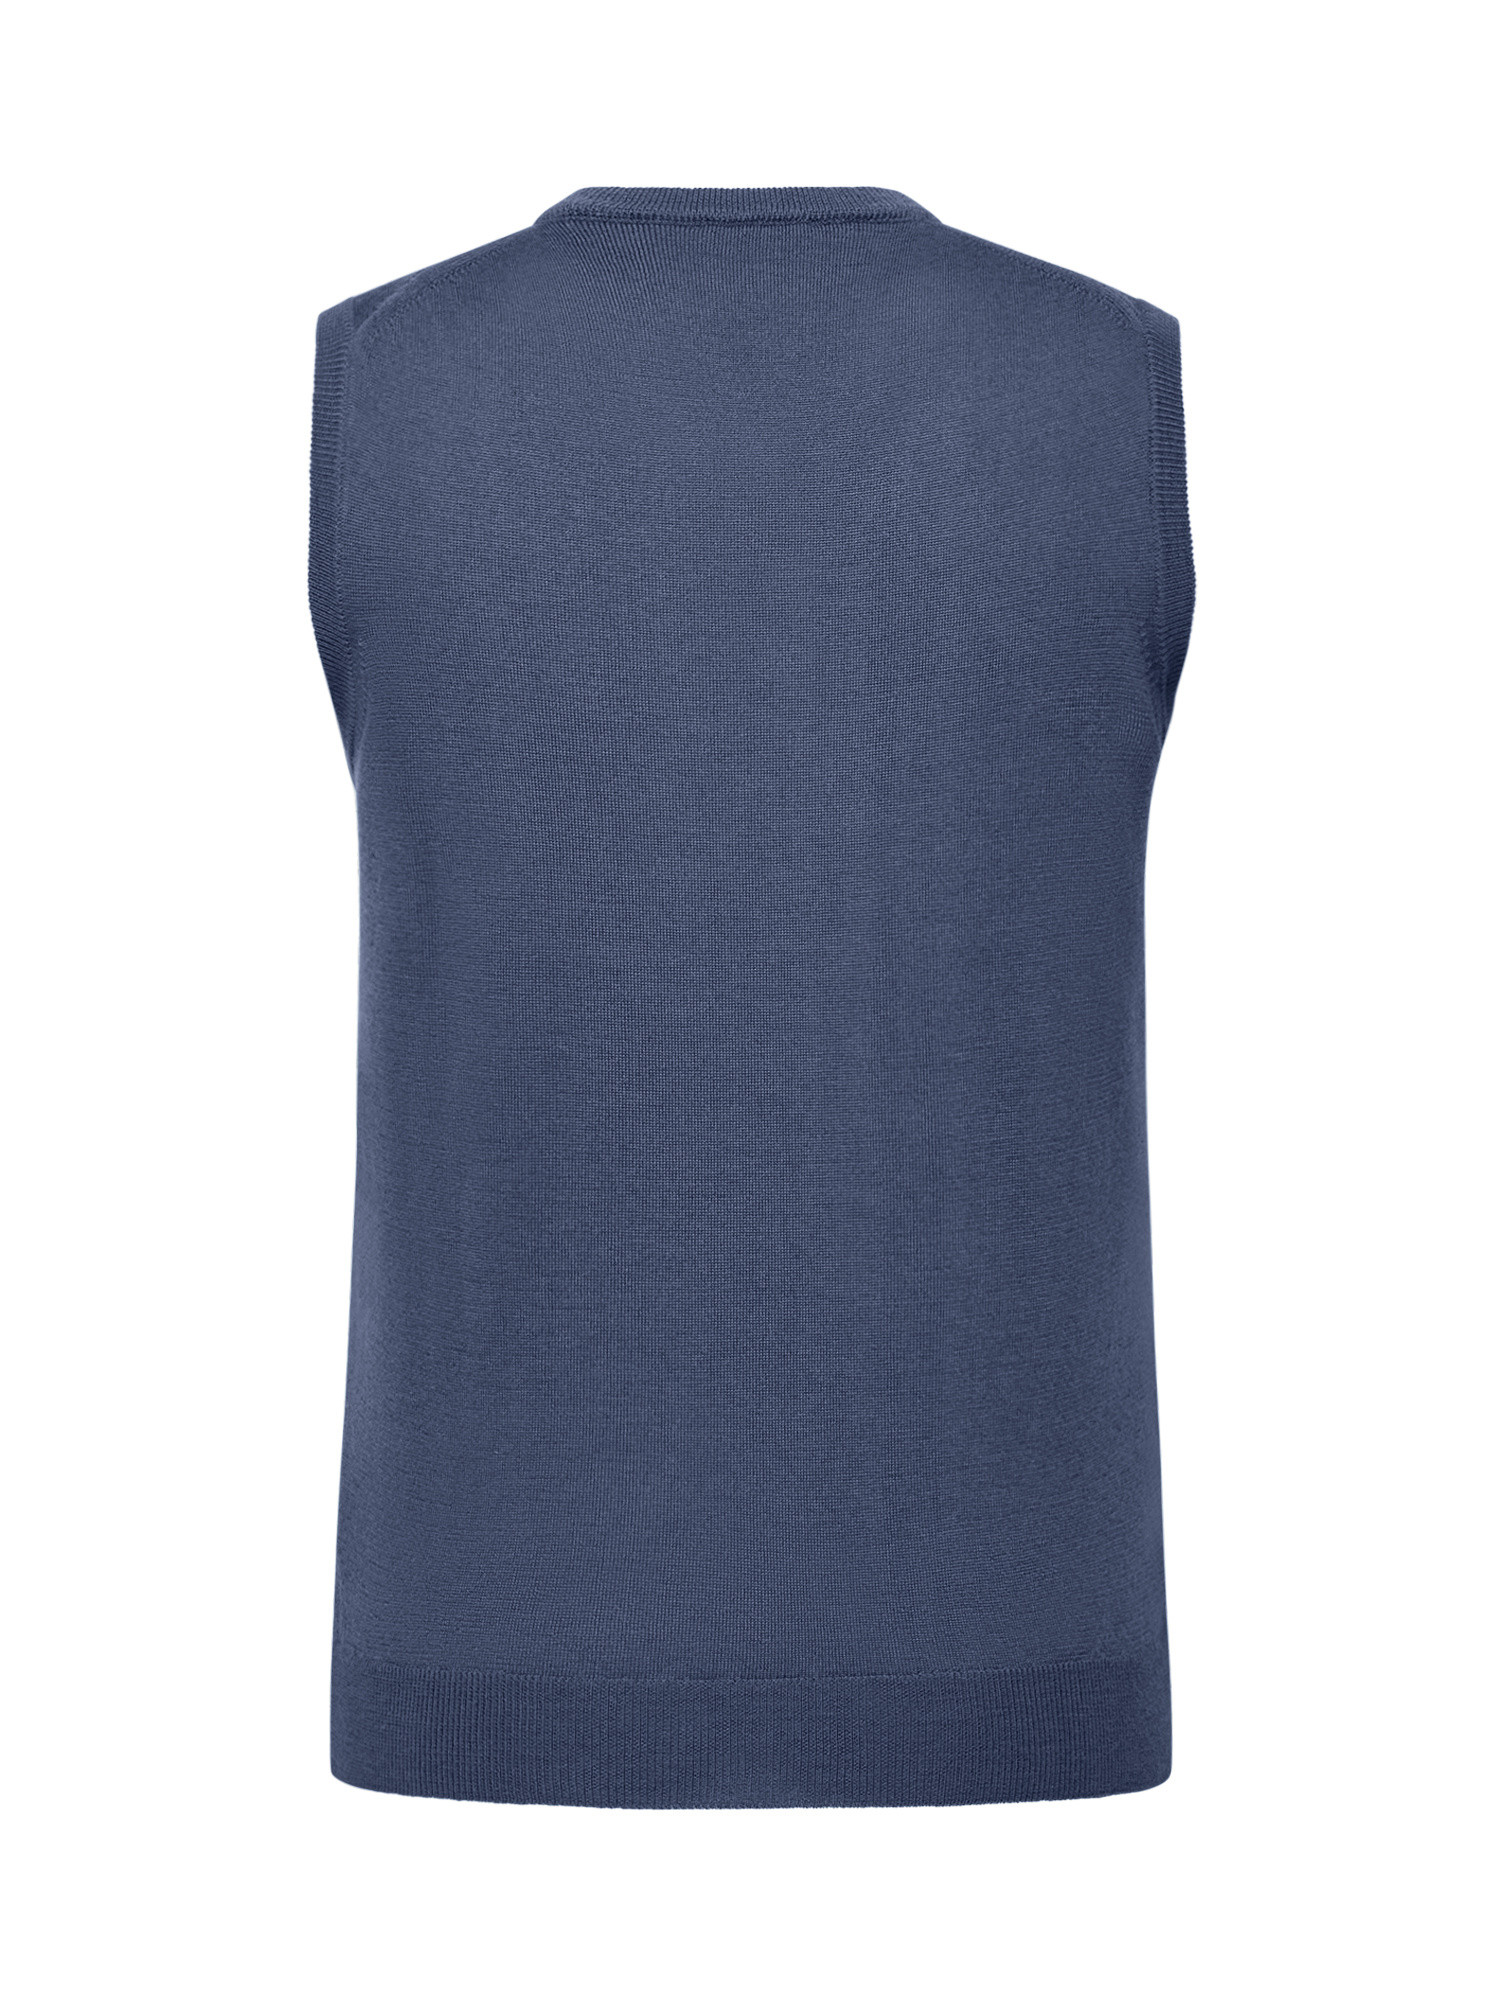 Luca D'Altieri - Merino Blend Vest - Machine Washable, Blue, large image number 1